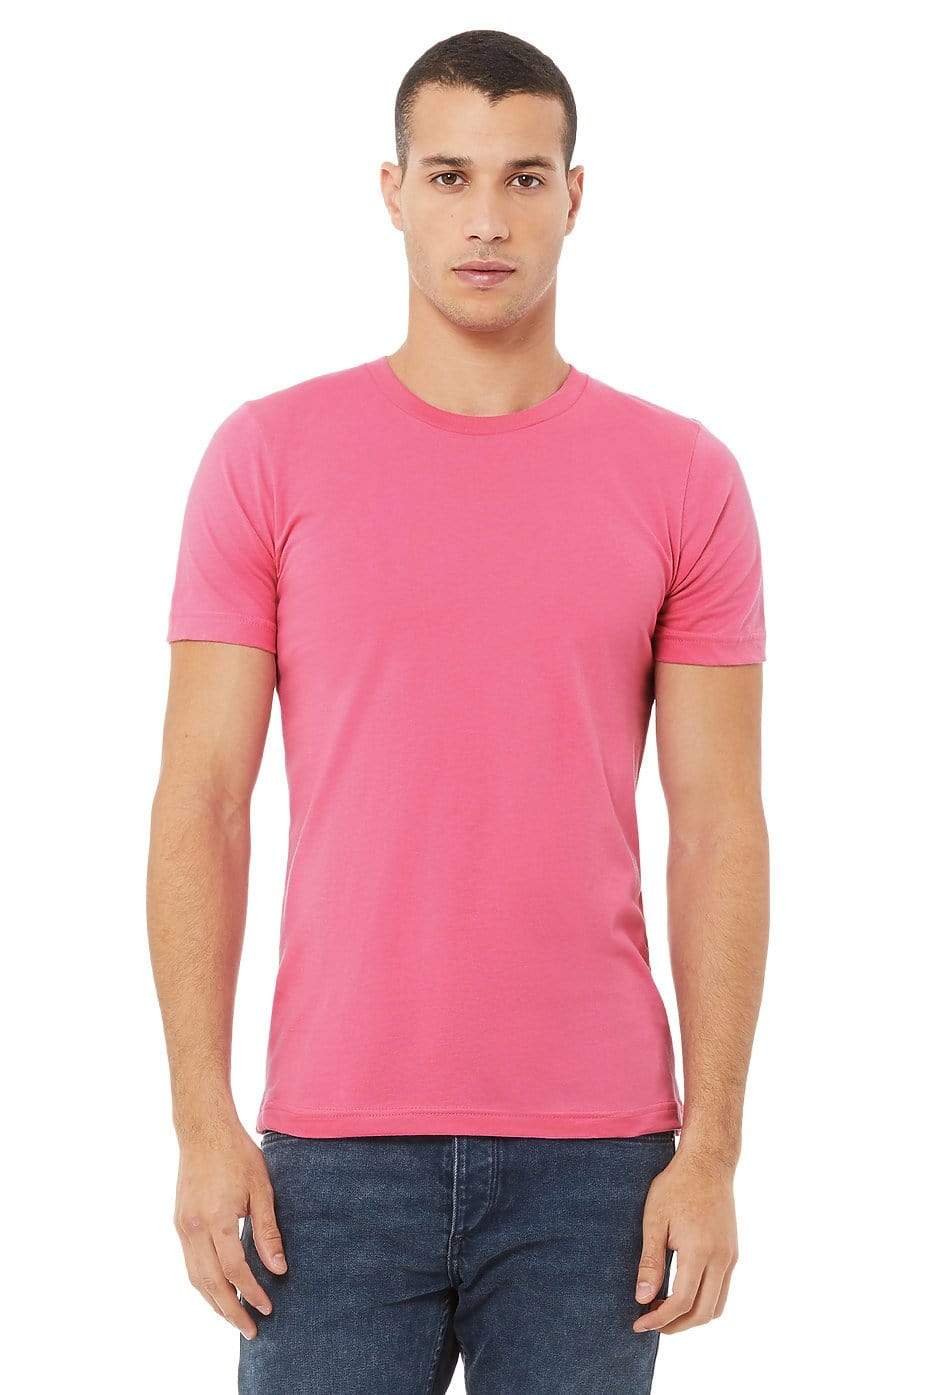 Grooveman Music T Shirt XS / Charity Pink Jersey Short Sleeve Tee